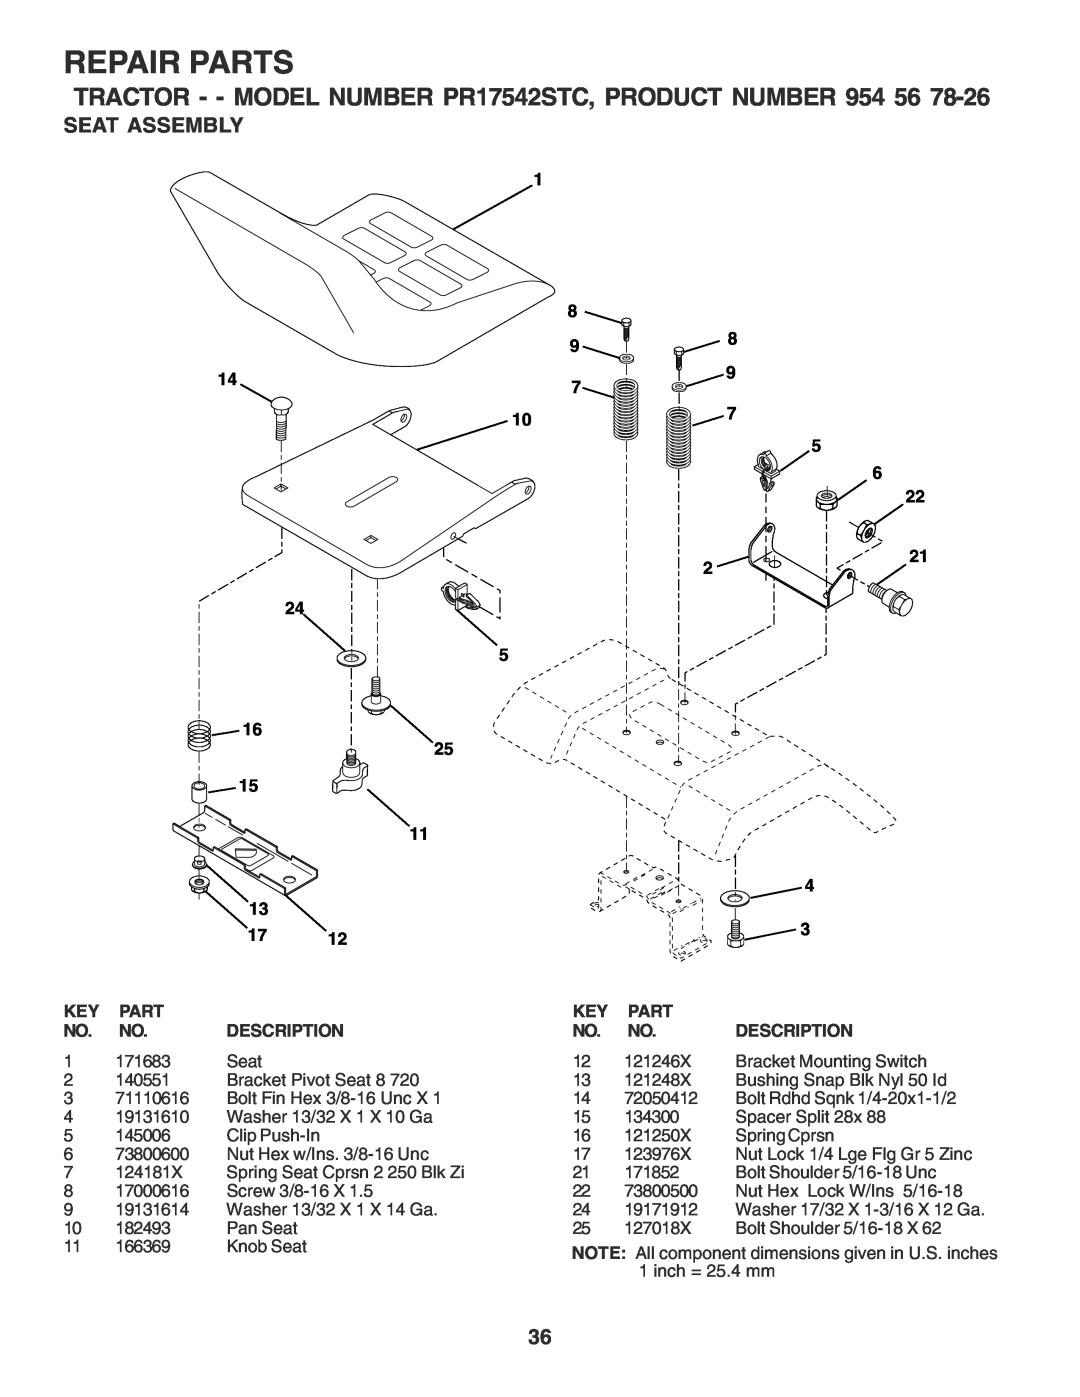 Poulan Seat Assembly, Repair Parts, TRACTOR - - MODEL NUMBER PR17542STC, PRODUCT NUMBER, Key Part No. No. Description 